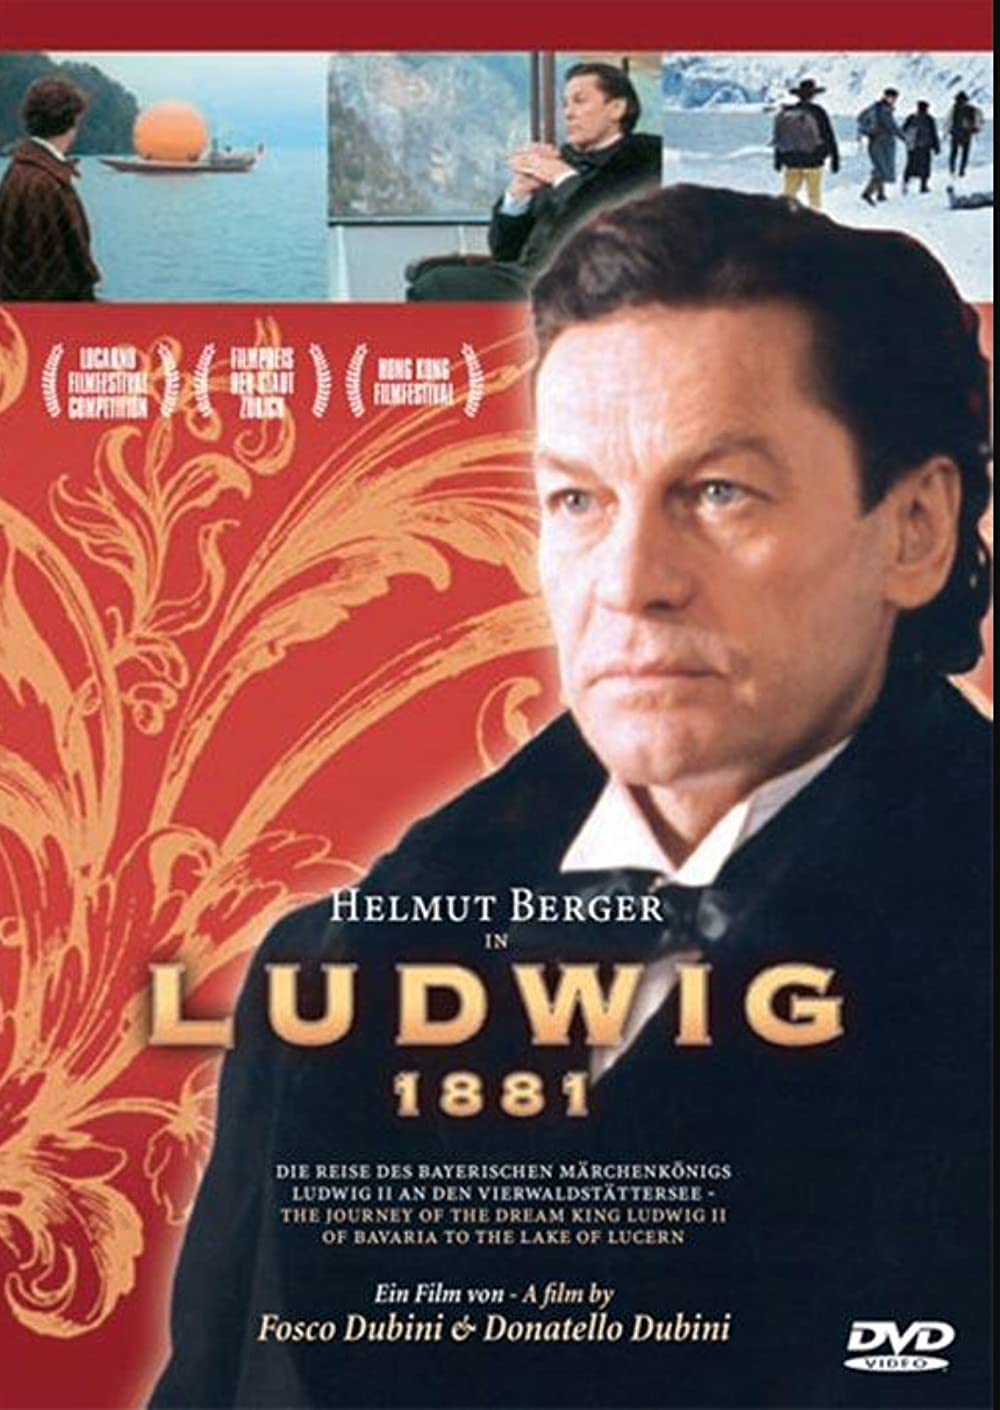 Filmbeschreibung zu Ludwig 1881